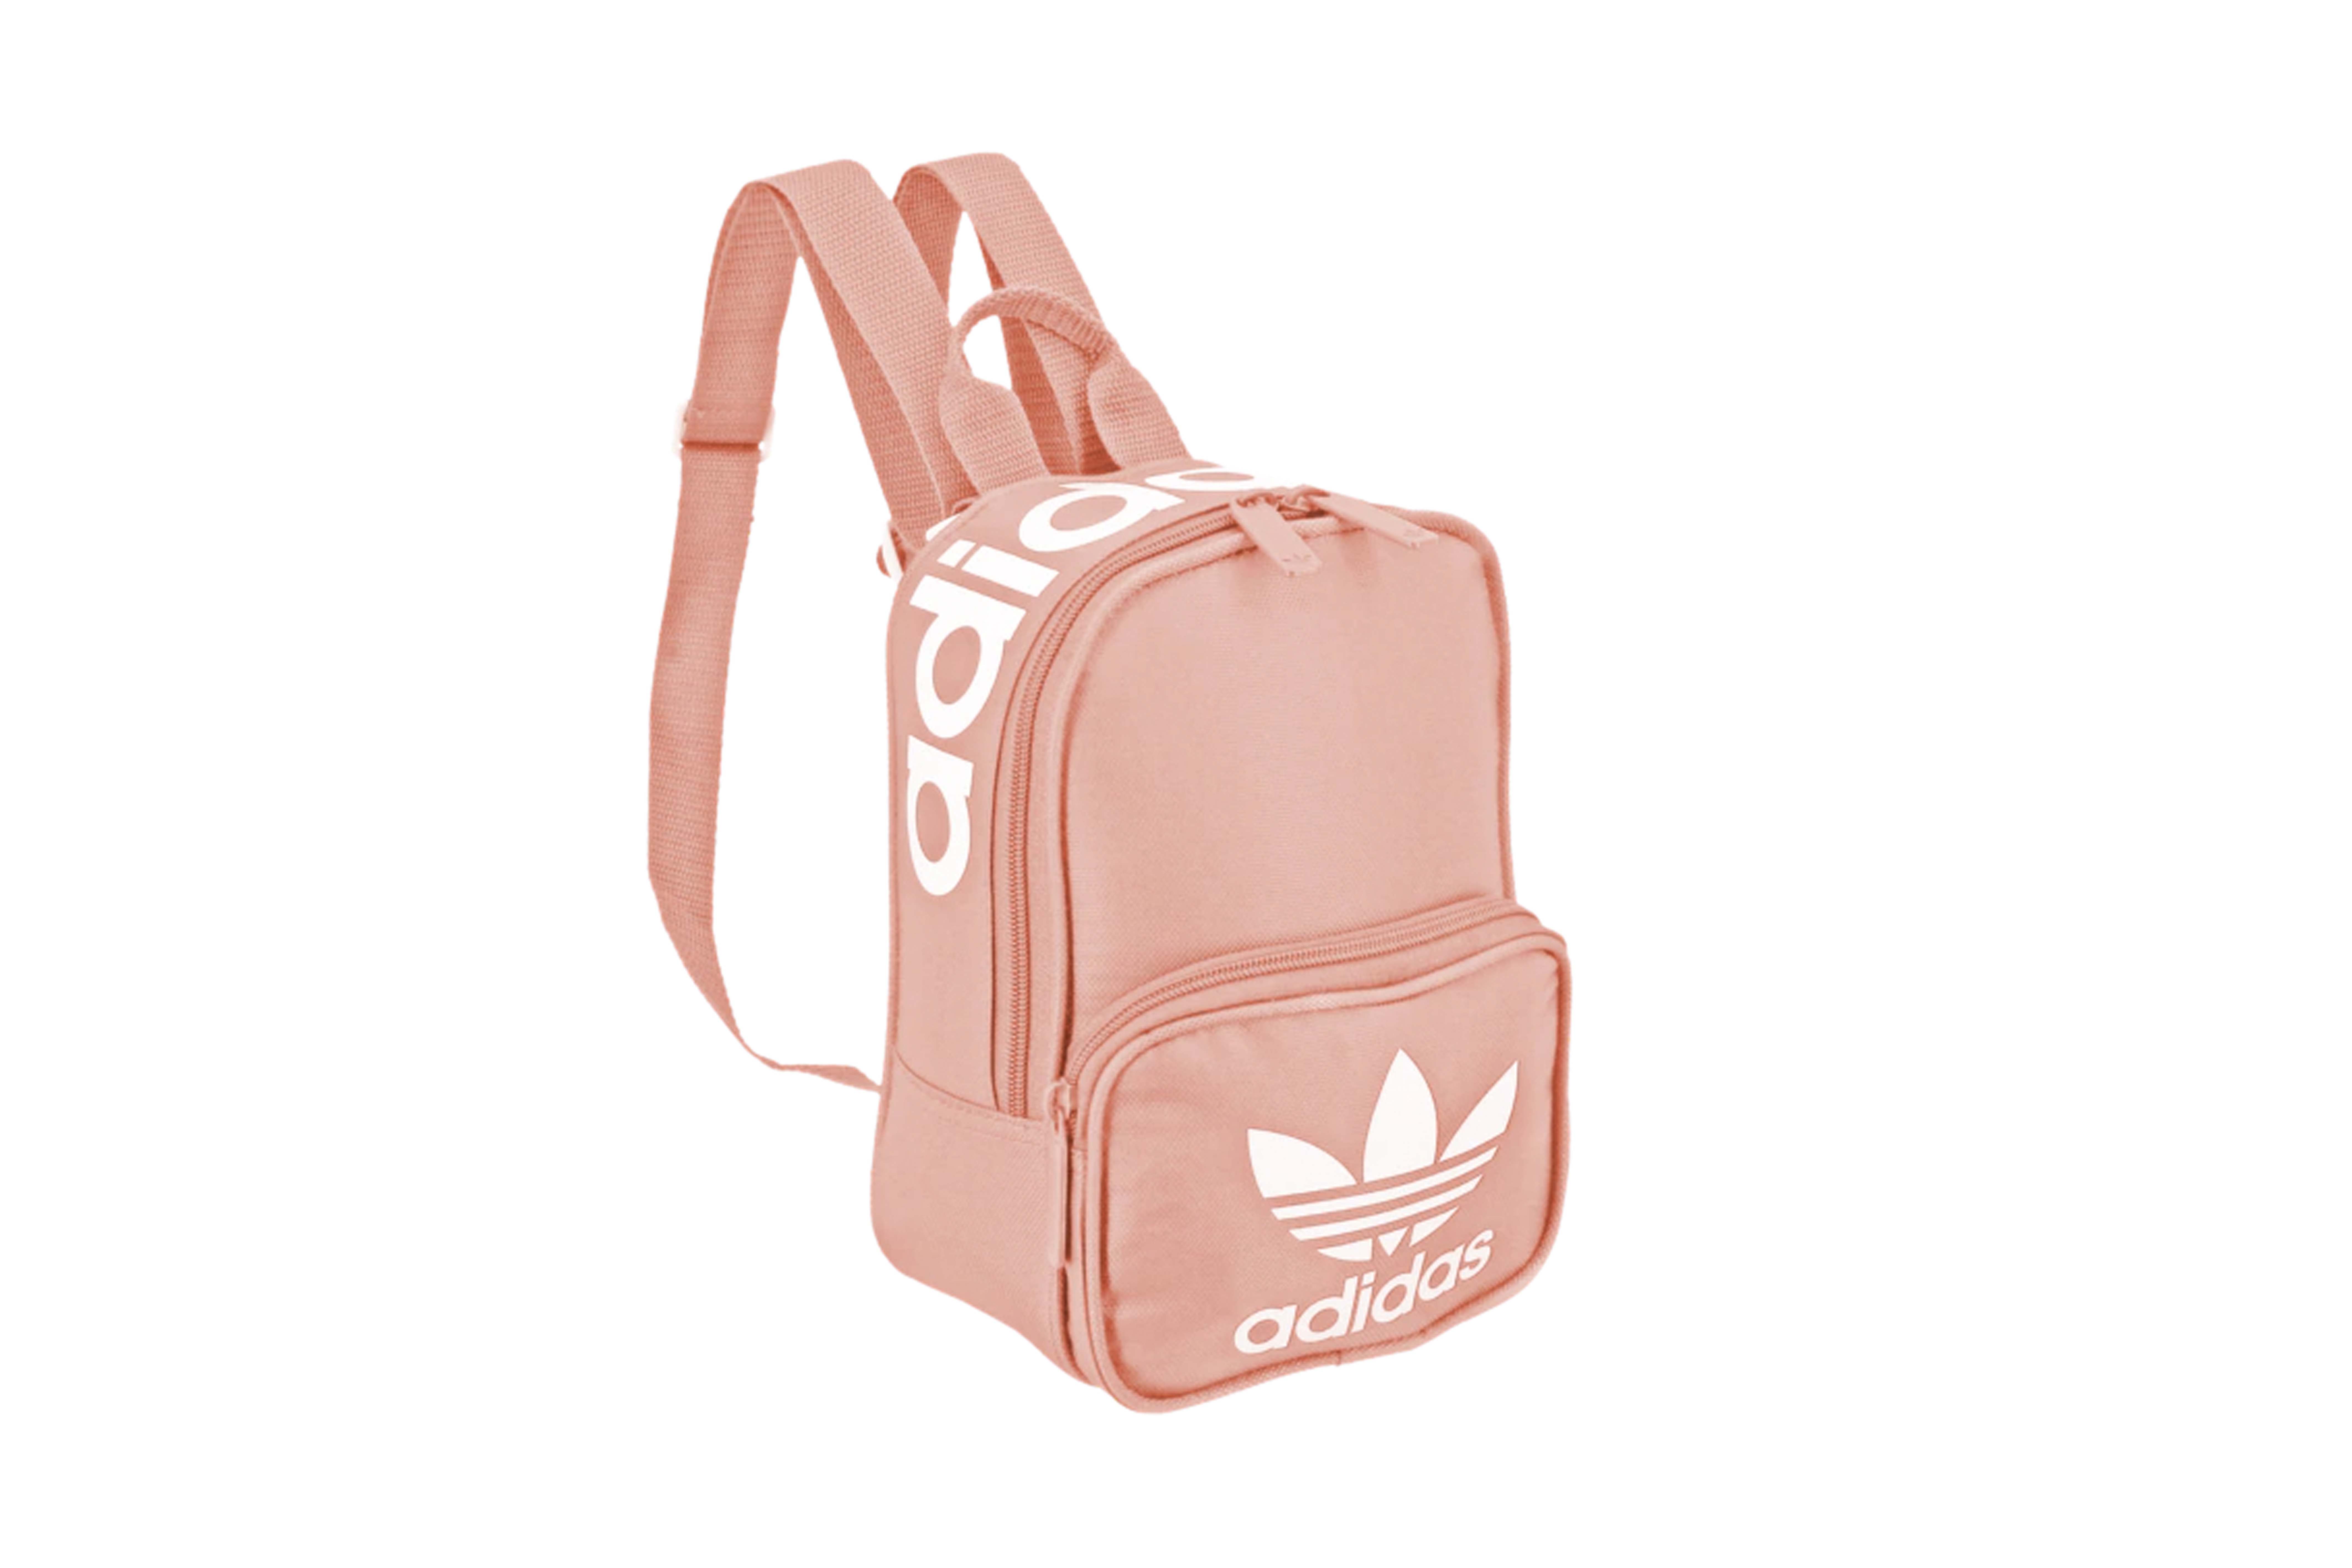 adidas Originals' Santiago Mini-Backpacks Red Black Pink Small Bag Sporty Trefoil Logo Print